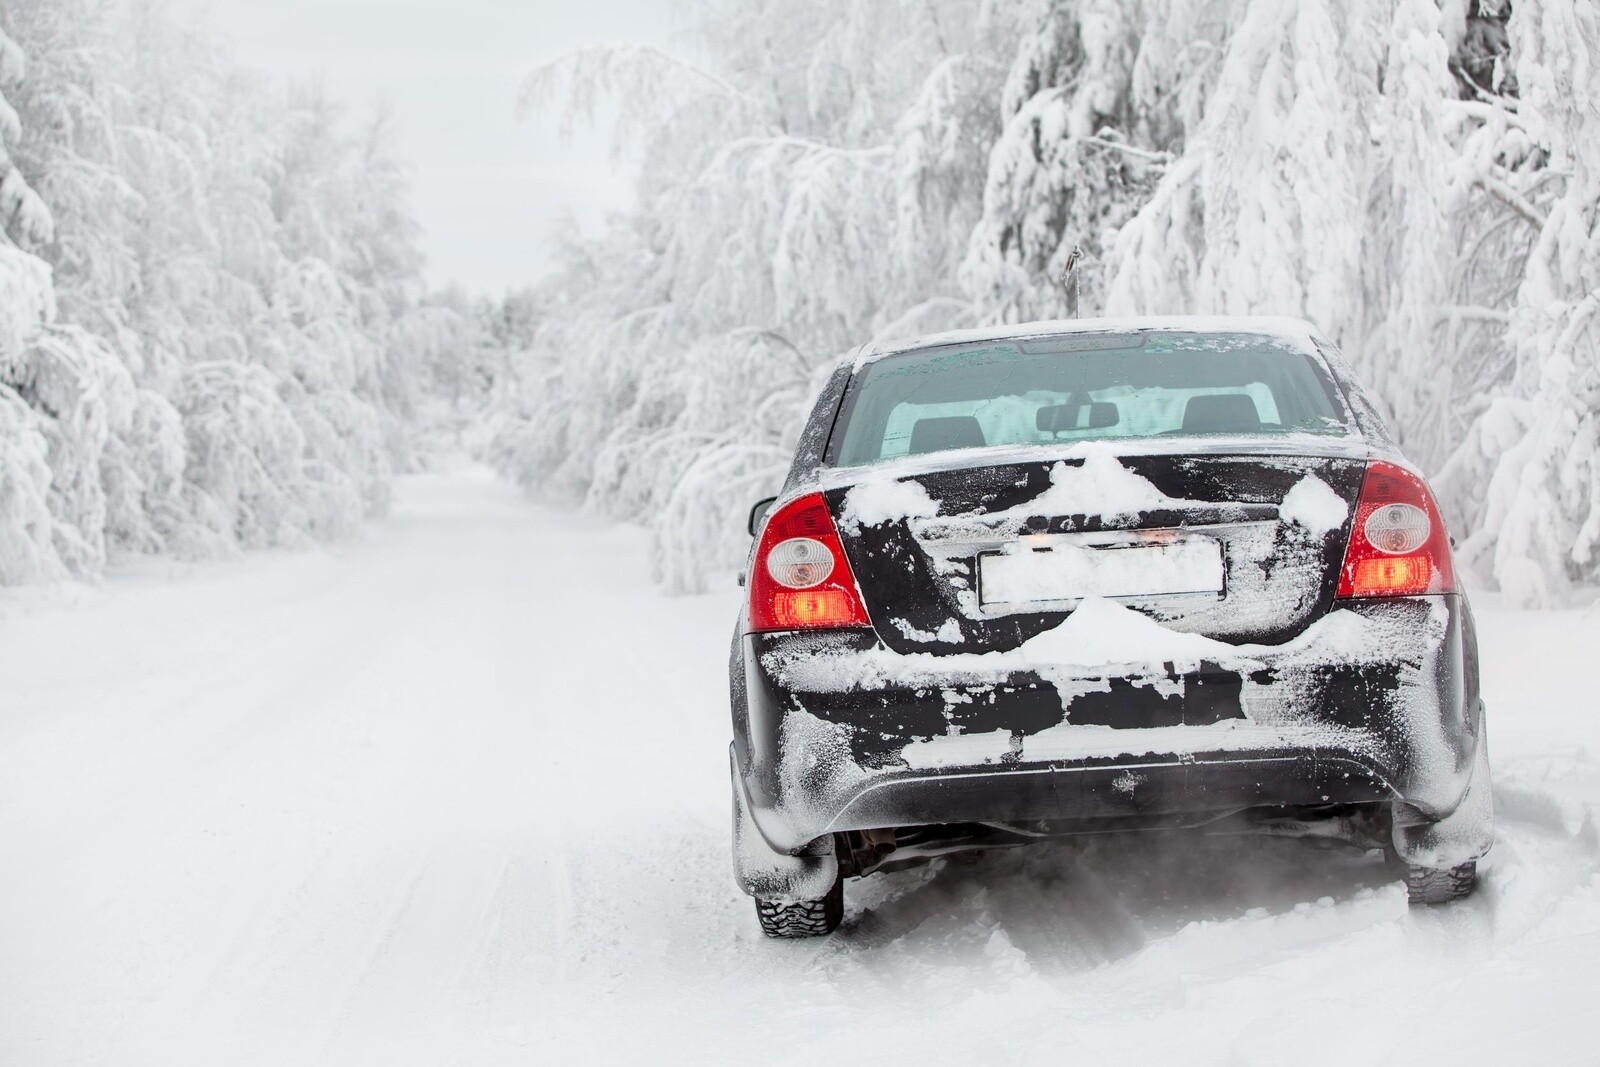 Снег сток. Машина зимой. Машина в снегу. Машины на зимнем фоне. Машина на зимней дороге.